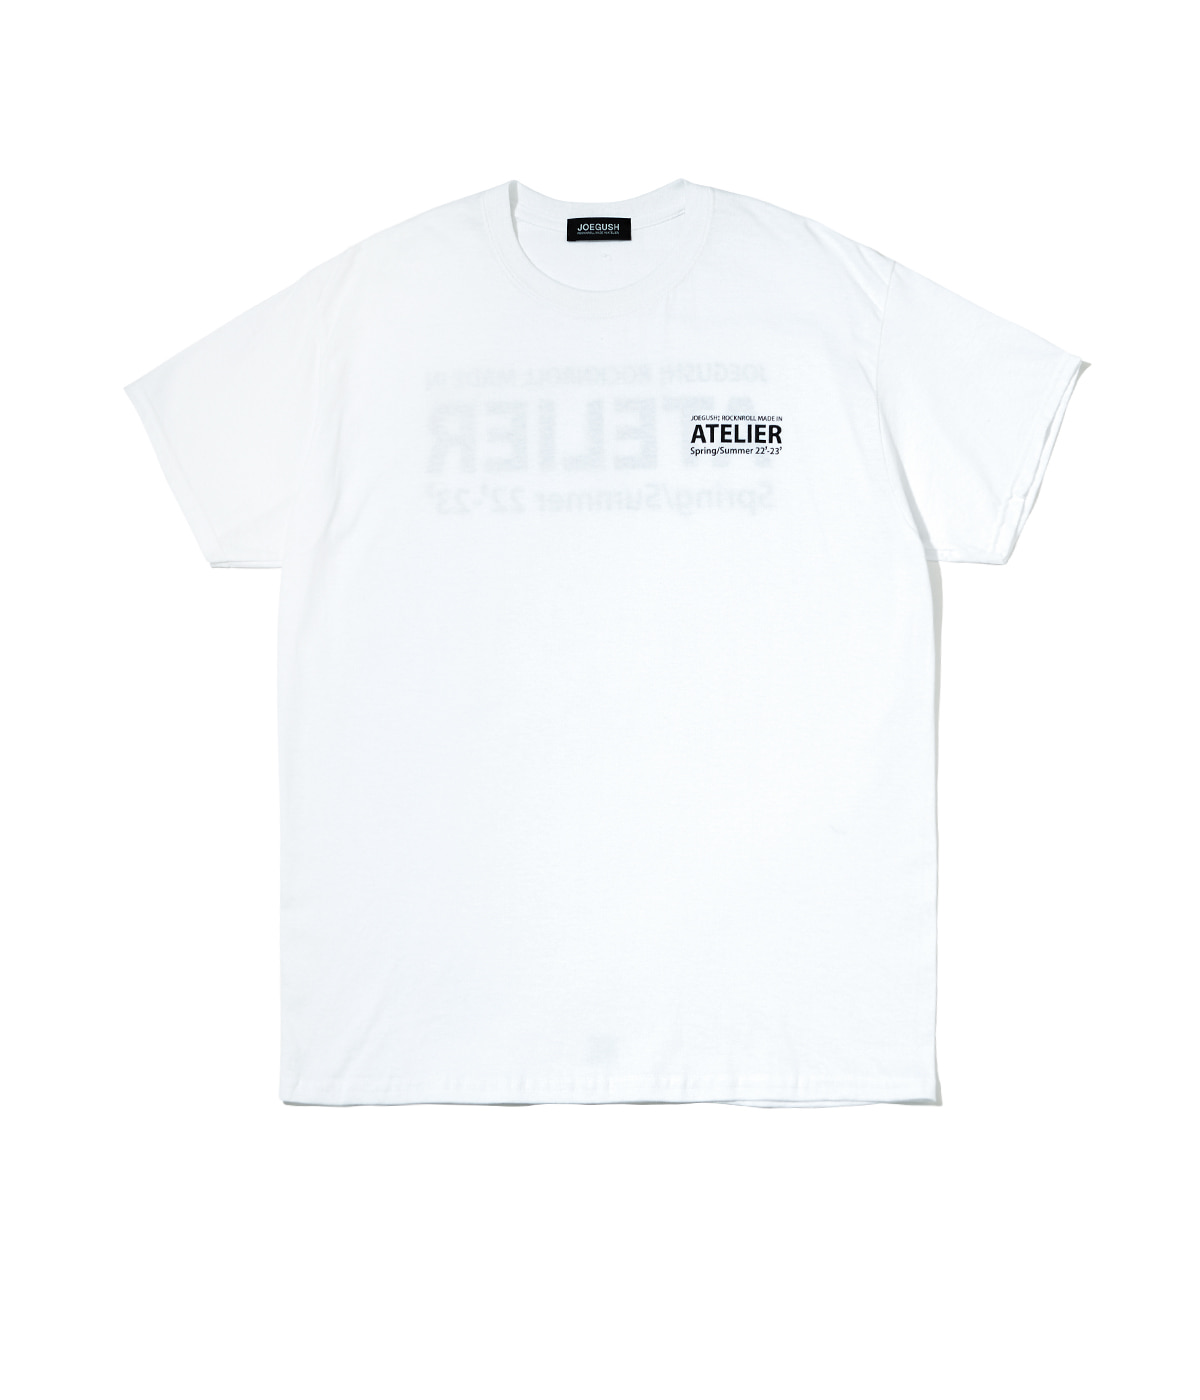 Atelier T-shirt (White)